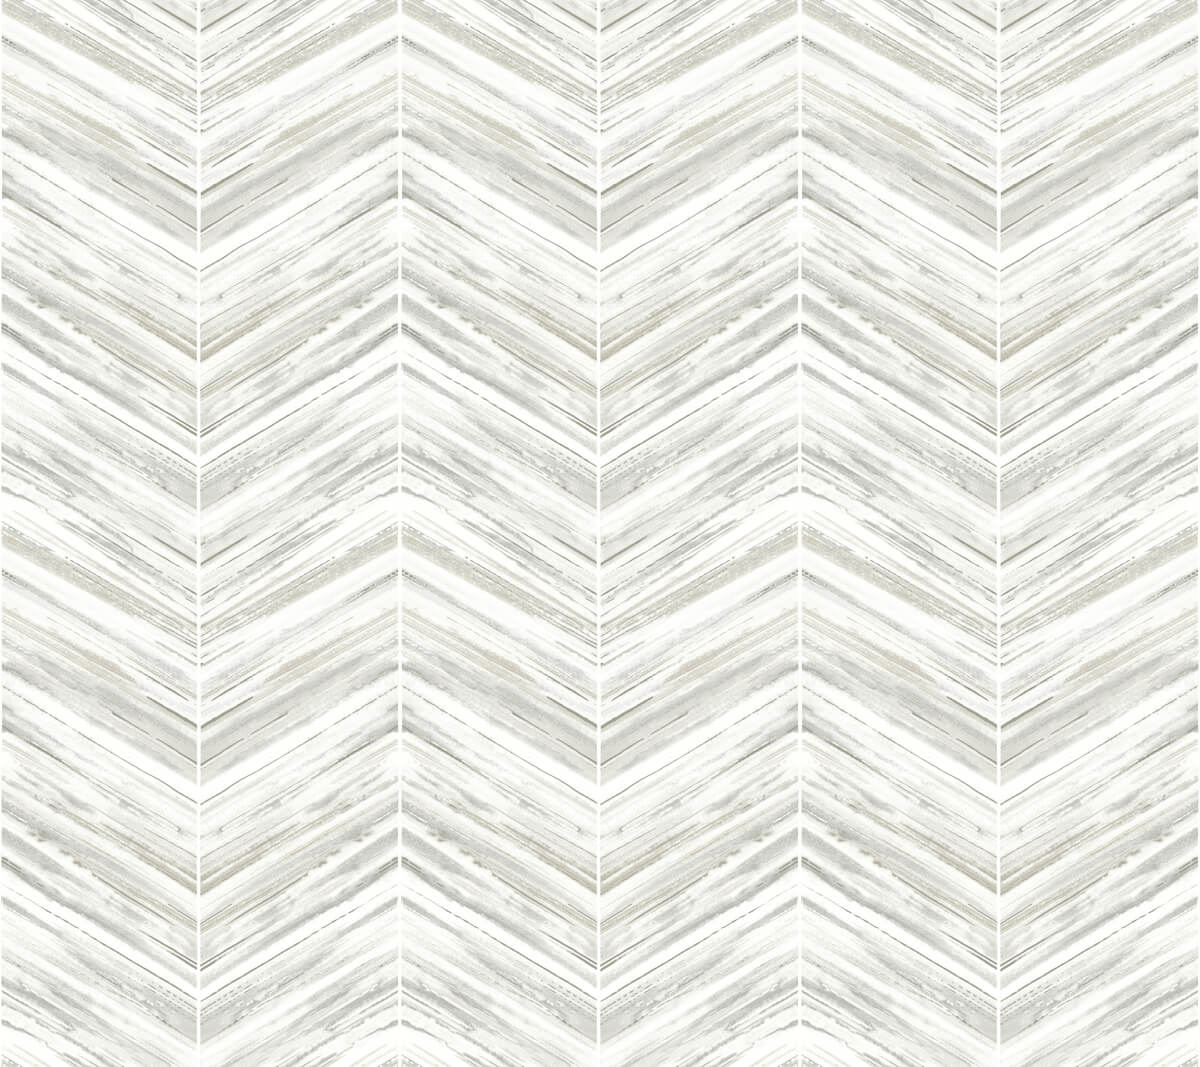 zigzag wallpaper black and white